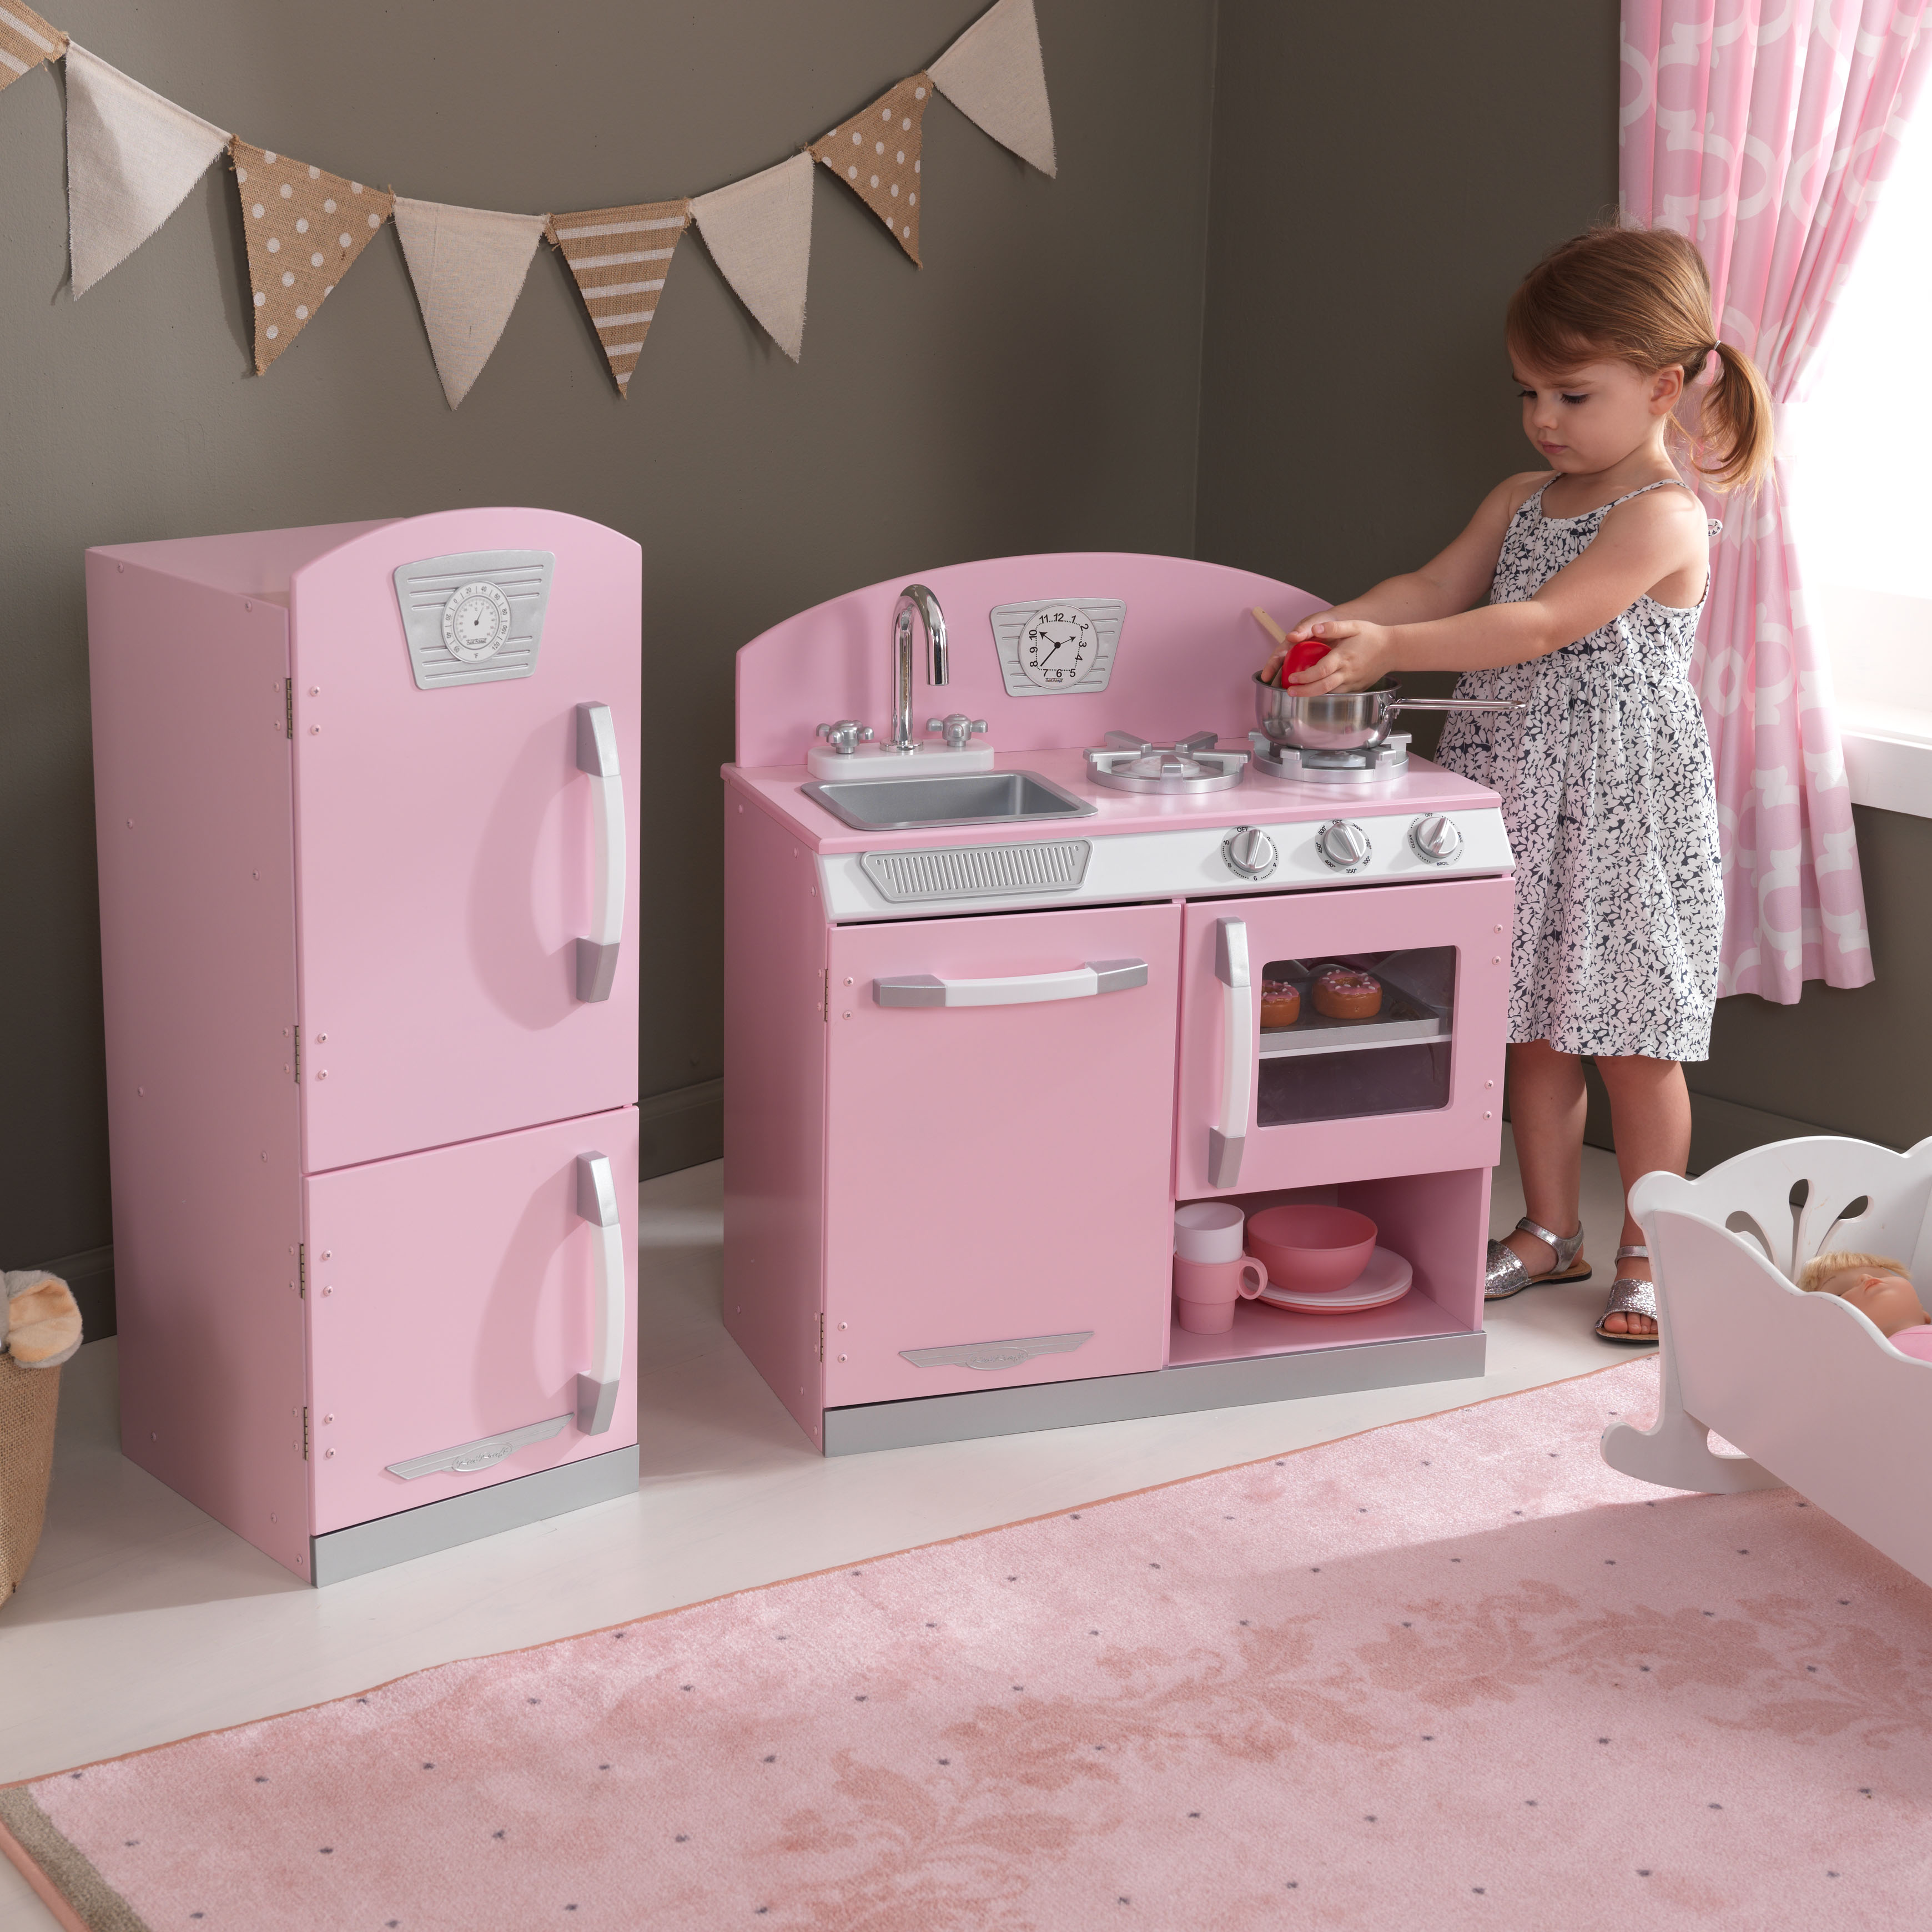 KidKraft Pink Retro Wooden Play Kitchen and Refrigerator 2-Piece Set - image 2 of 14